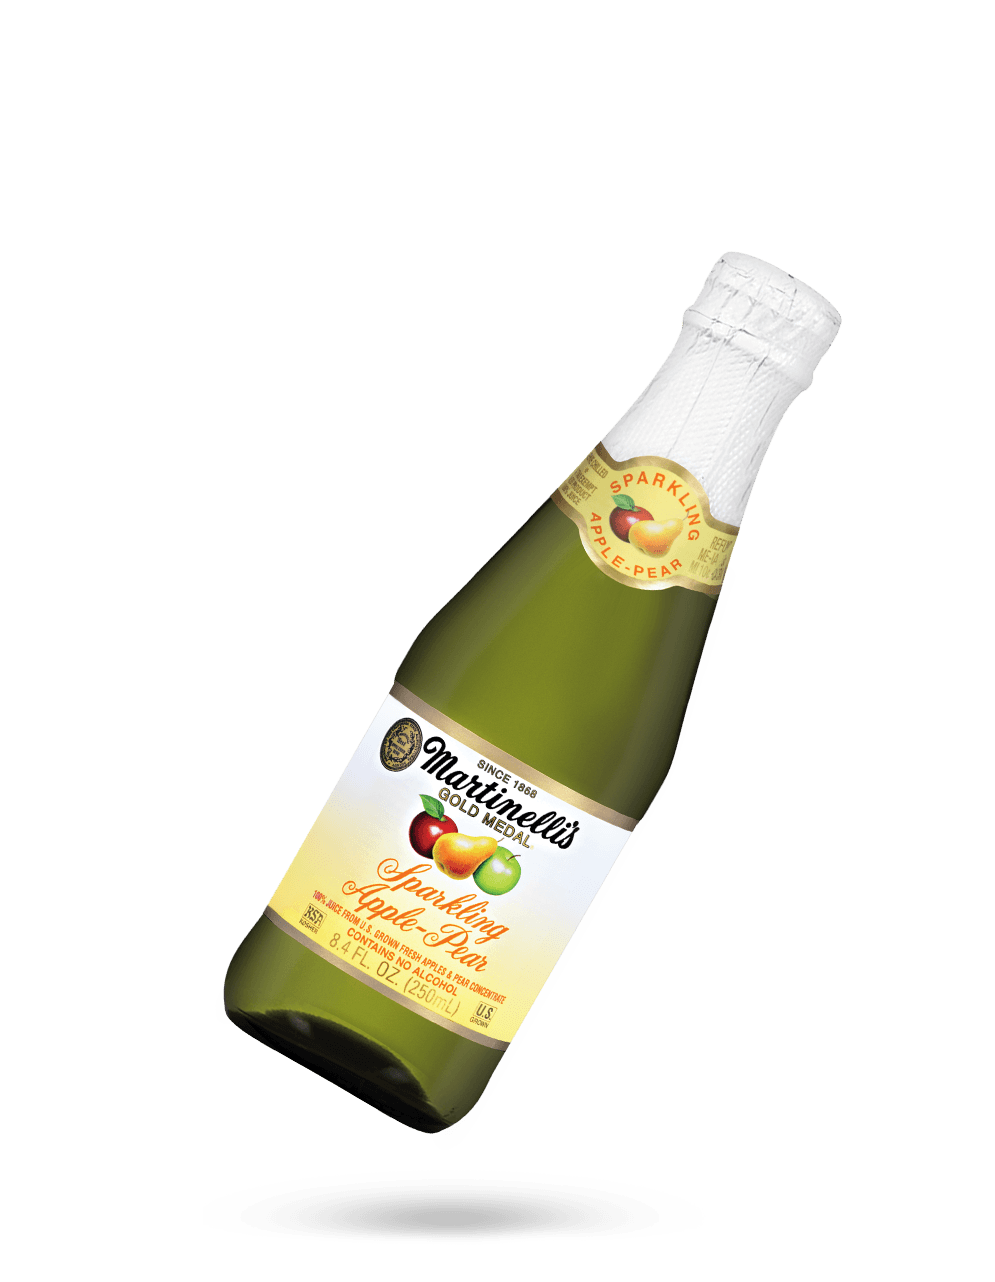 Sparkling Apple-Pear Juice 8.4oz- Sparkling Juices - S. Martinelli & Co